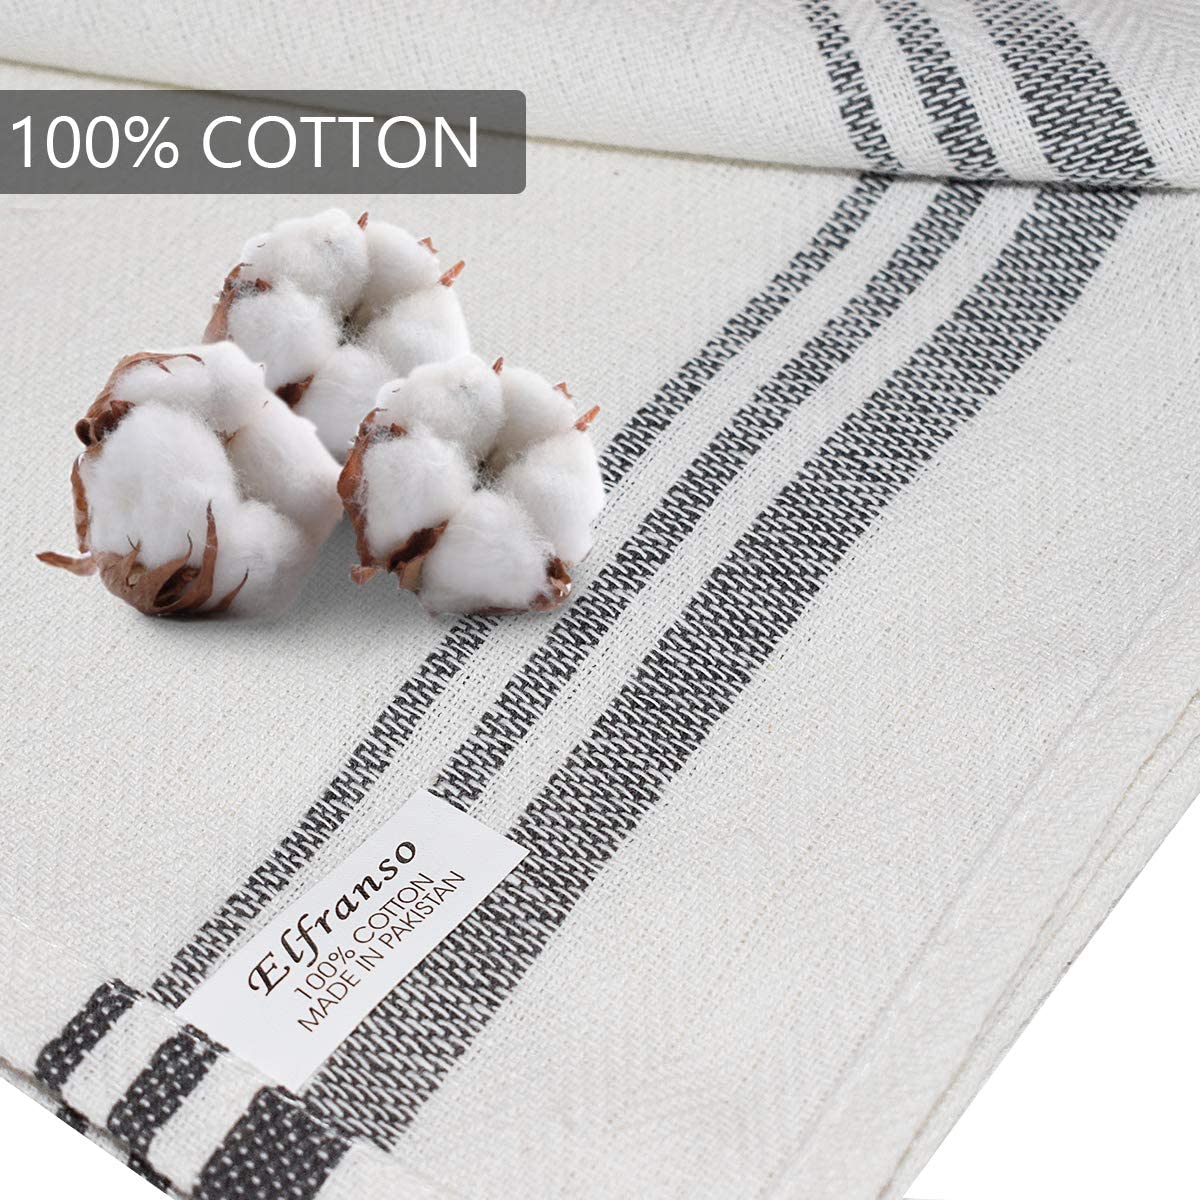 100% Cotton Kitchen Tea towels- Pack of 5 and Absorbent Tea Towels set, 70 x 50 cm Towels 4